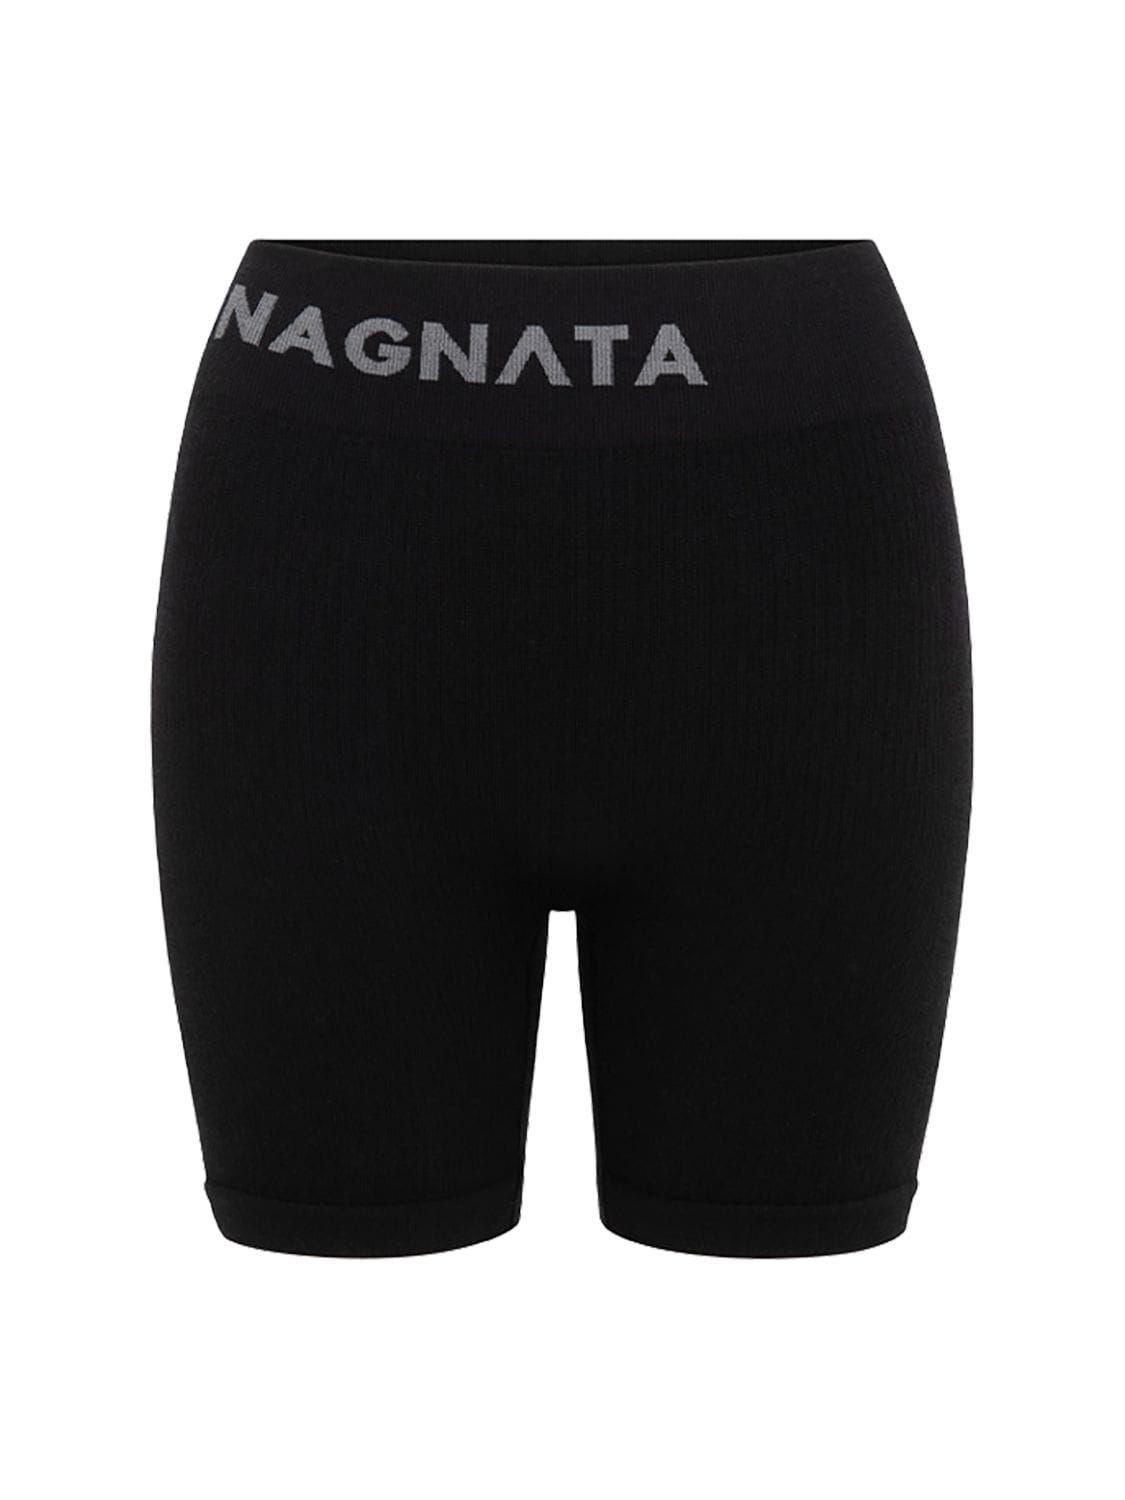 Nagnata Yang Wool Blend Mini Shorts in Black | Lyst